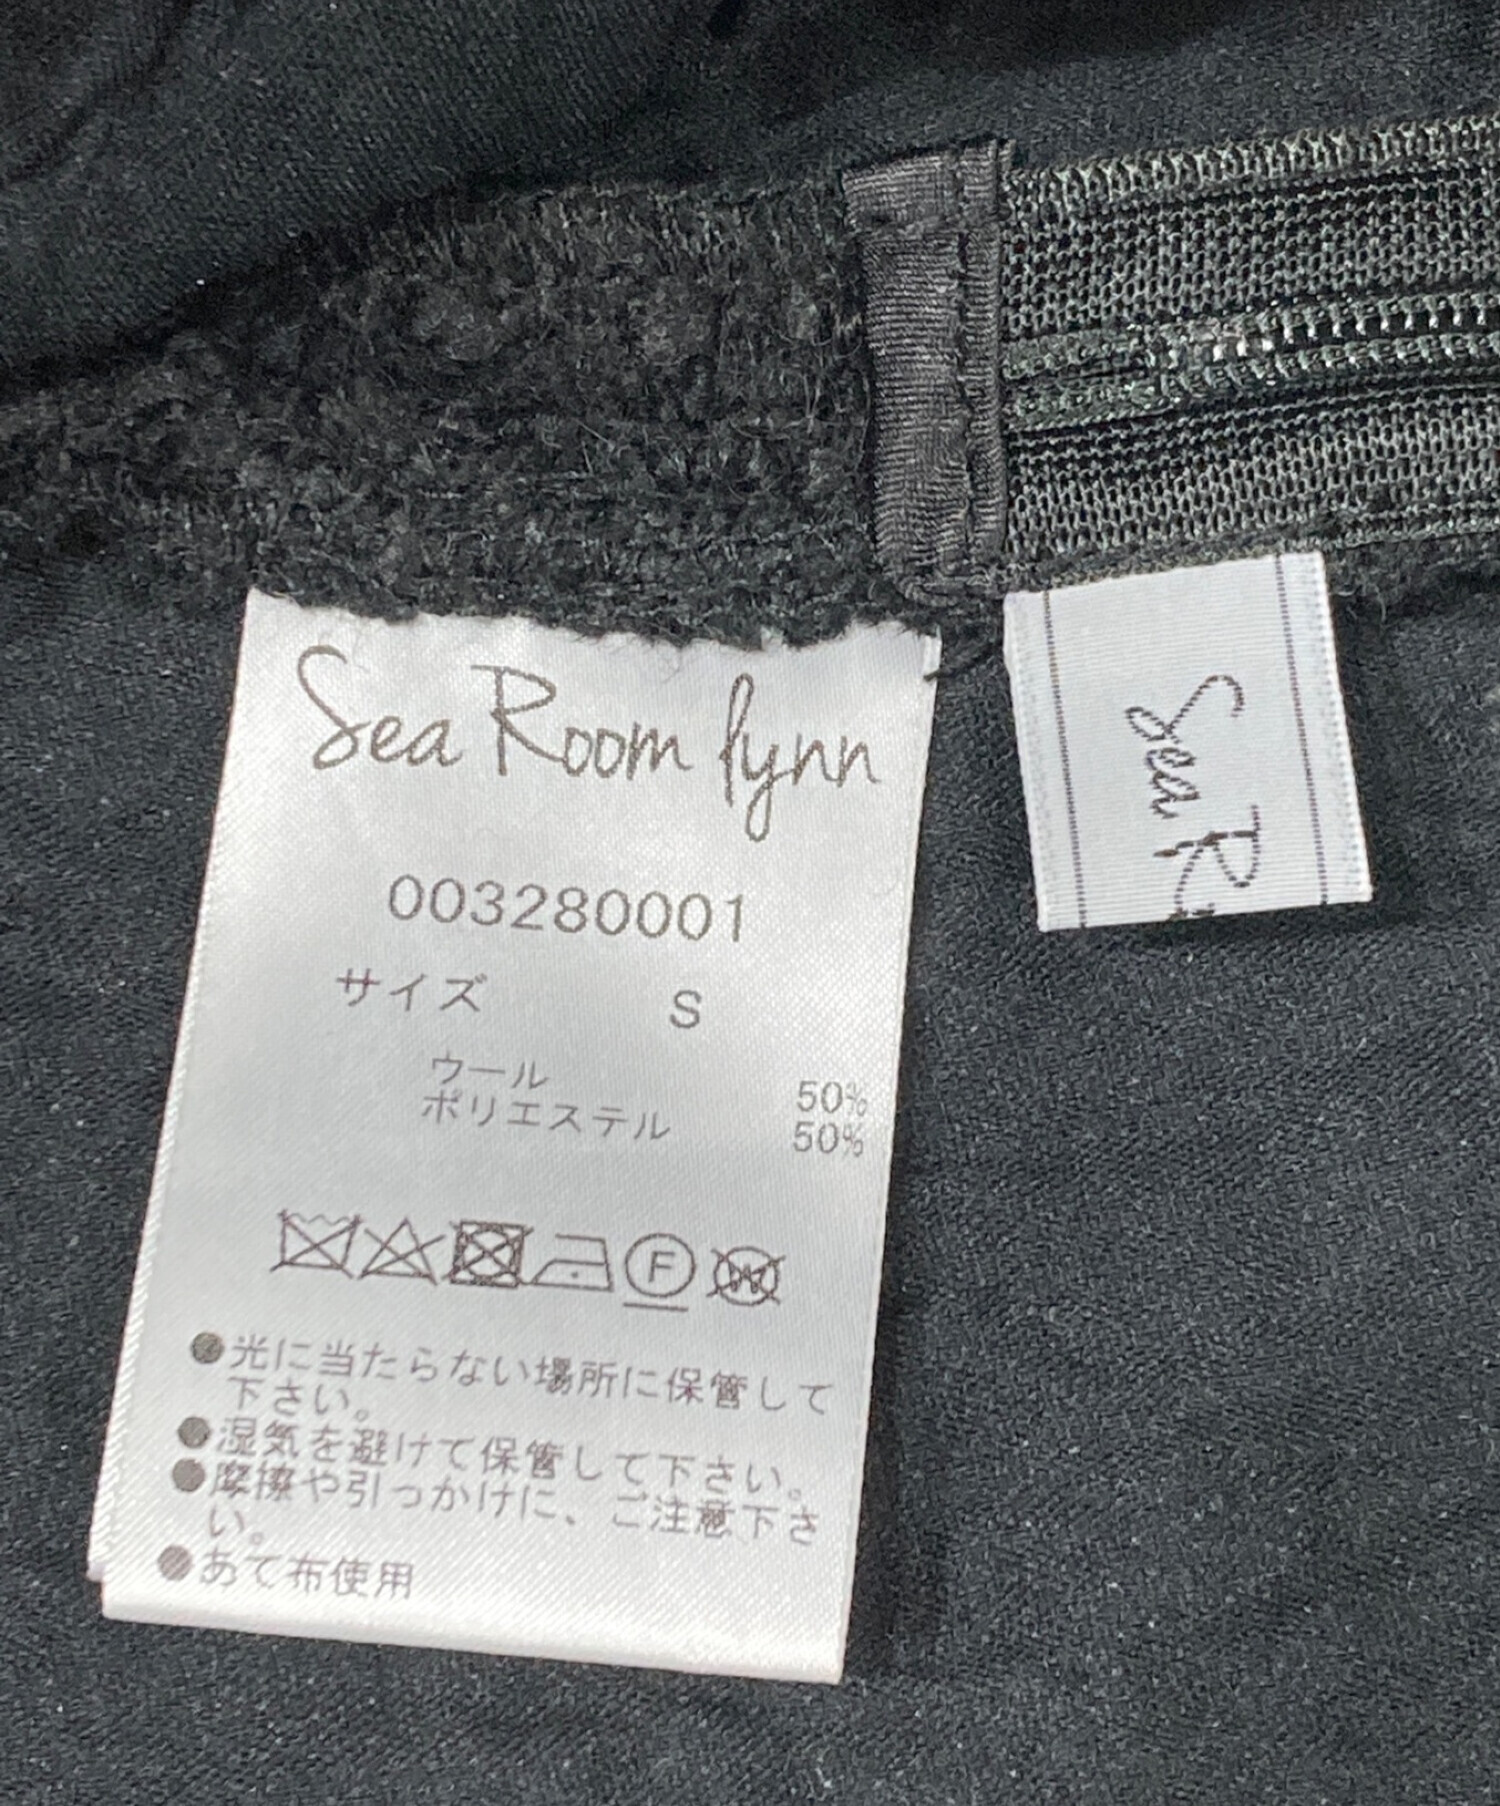 sea room lynn ツイードスカラップminiスカート ミニスカート スカート